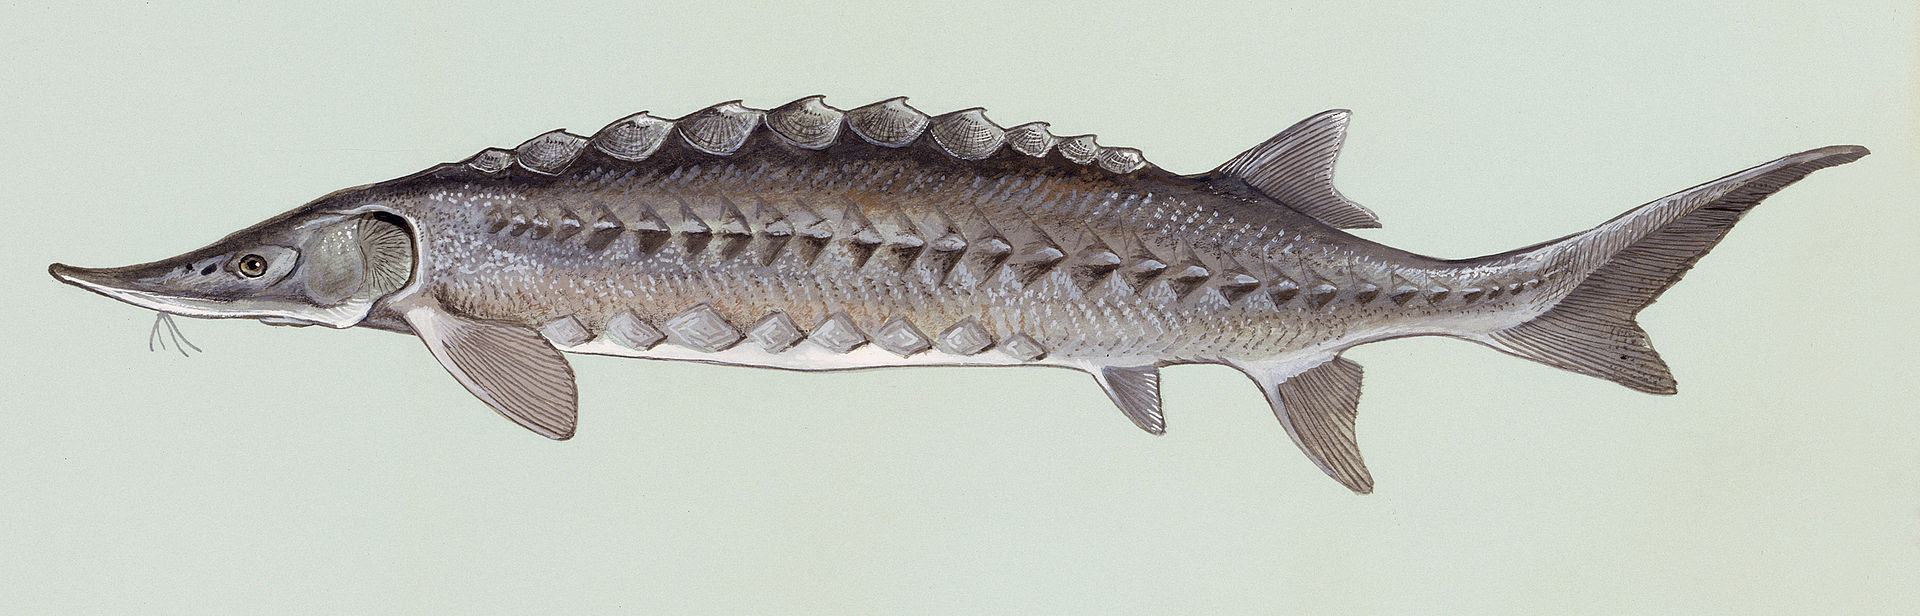 Acipenser oxyrhynchus  - sturgeon - by Duane Raver, U.S. Fish and Wildlife Service, via Wikimedia Commons